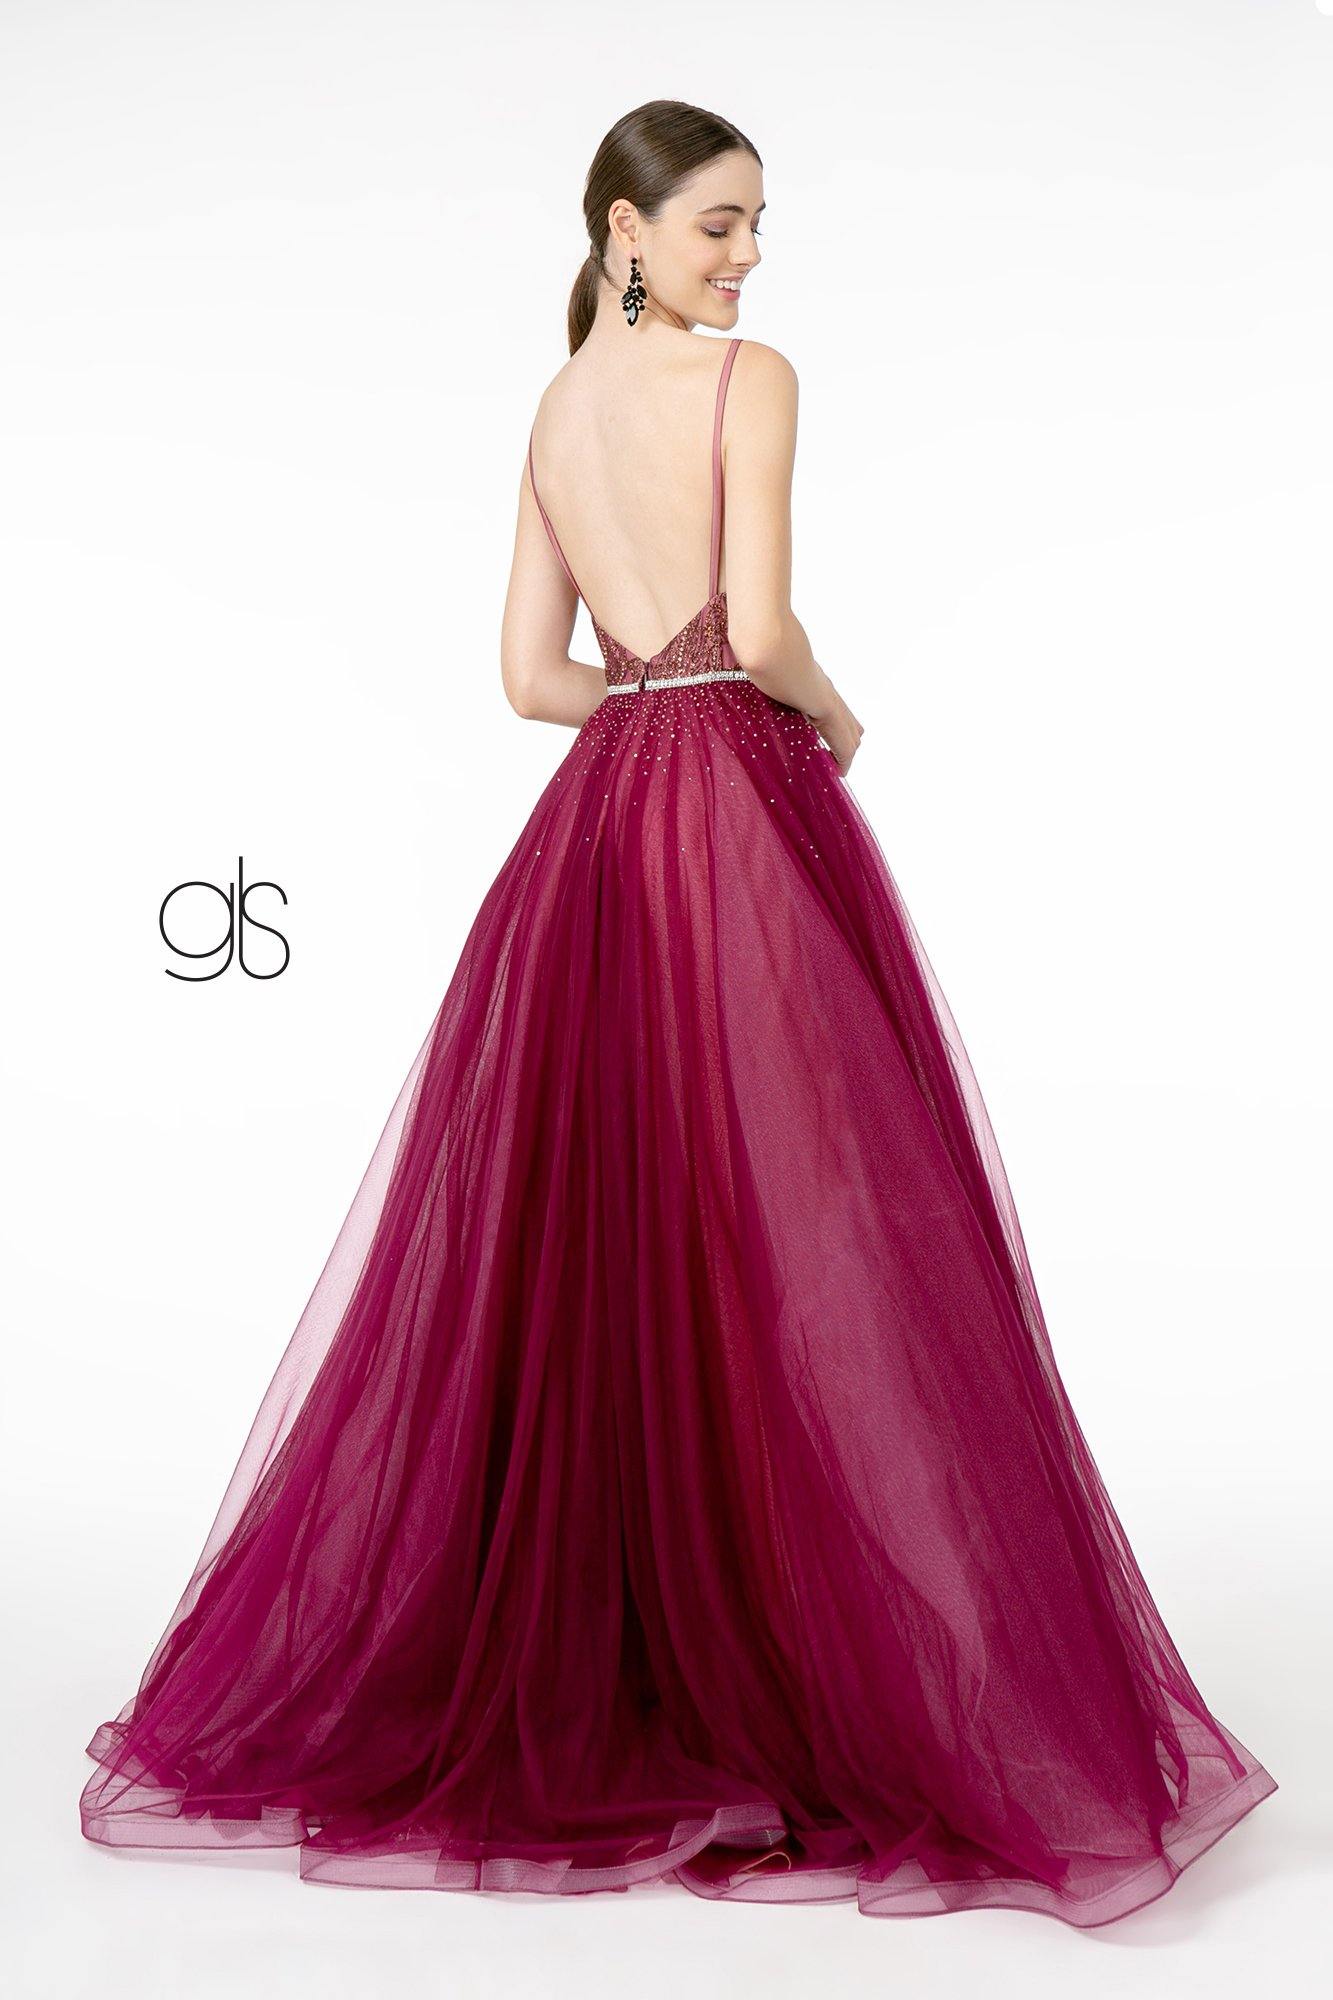 Gliiter Mesh A-Line Long Prom Dress - The Dress Outlet Elizabeth K